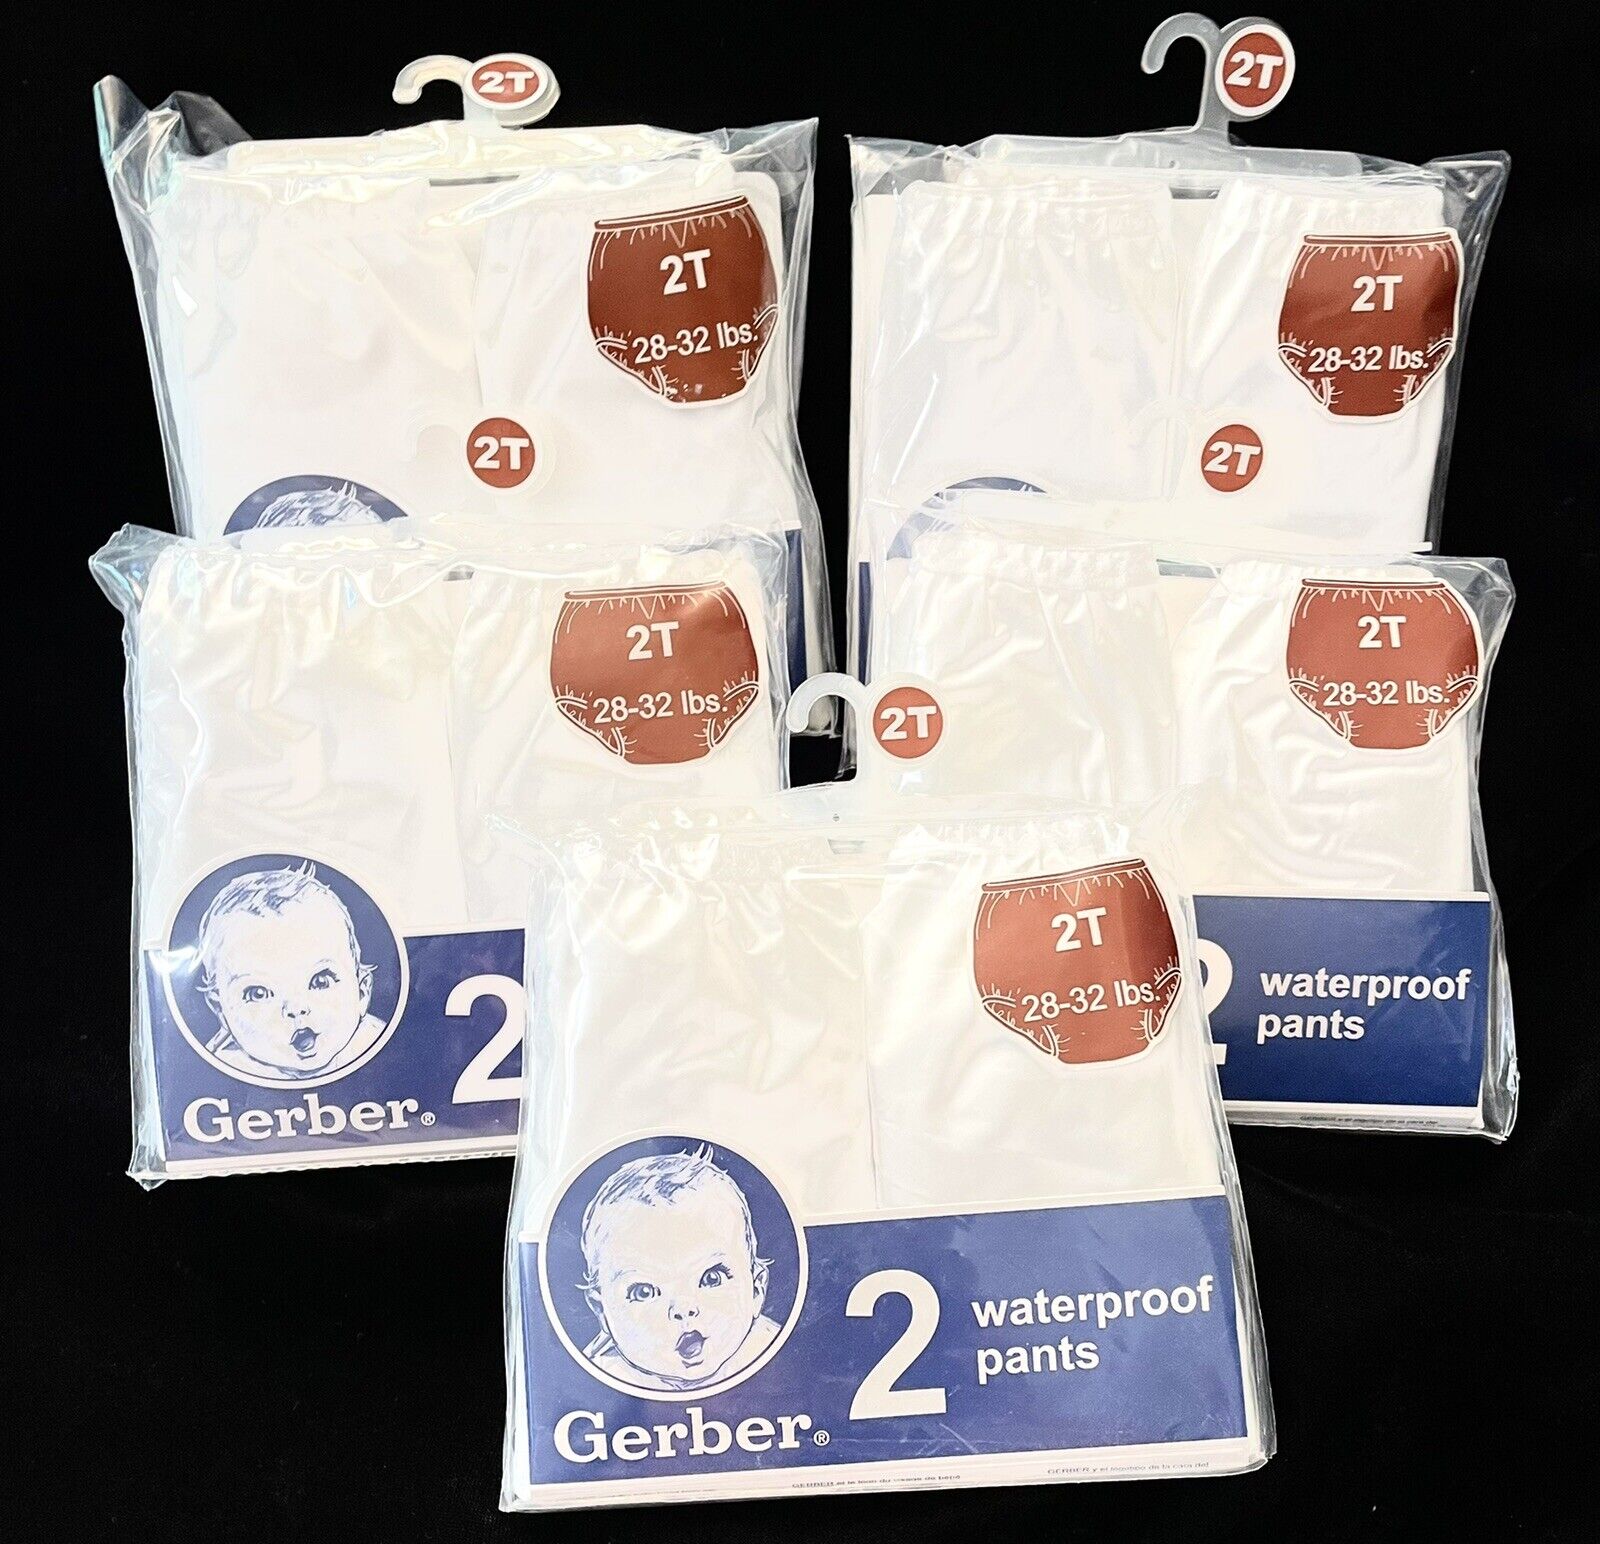 5- 2 Pack Gerber Waterproof Pants White Size 2t 28-32 Lbs. New. (10 Total)